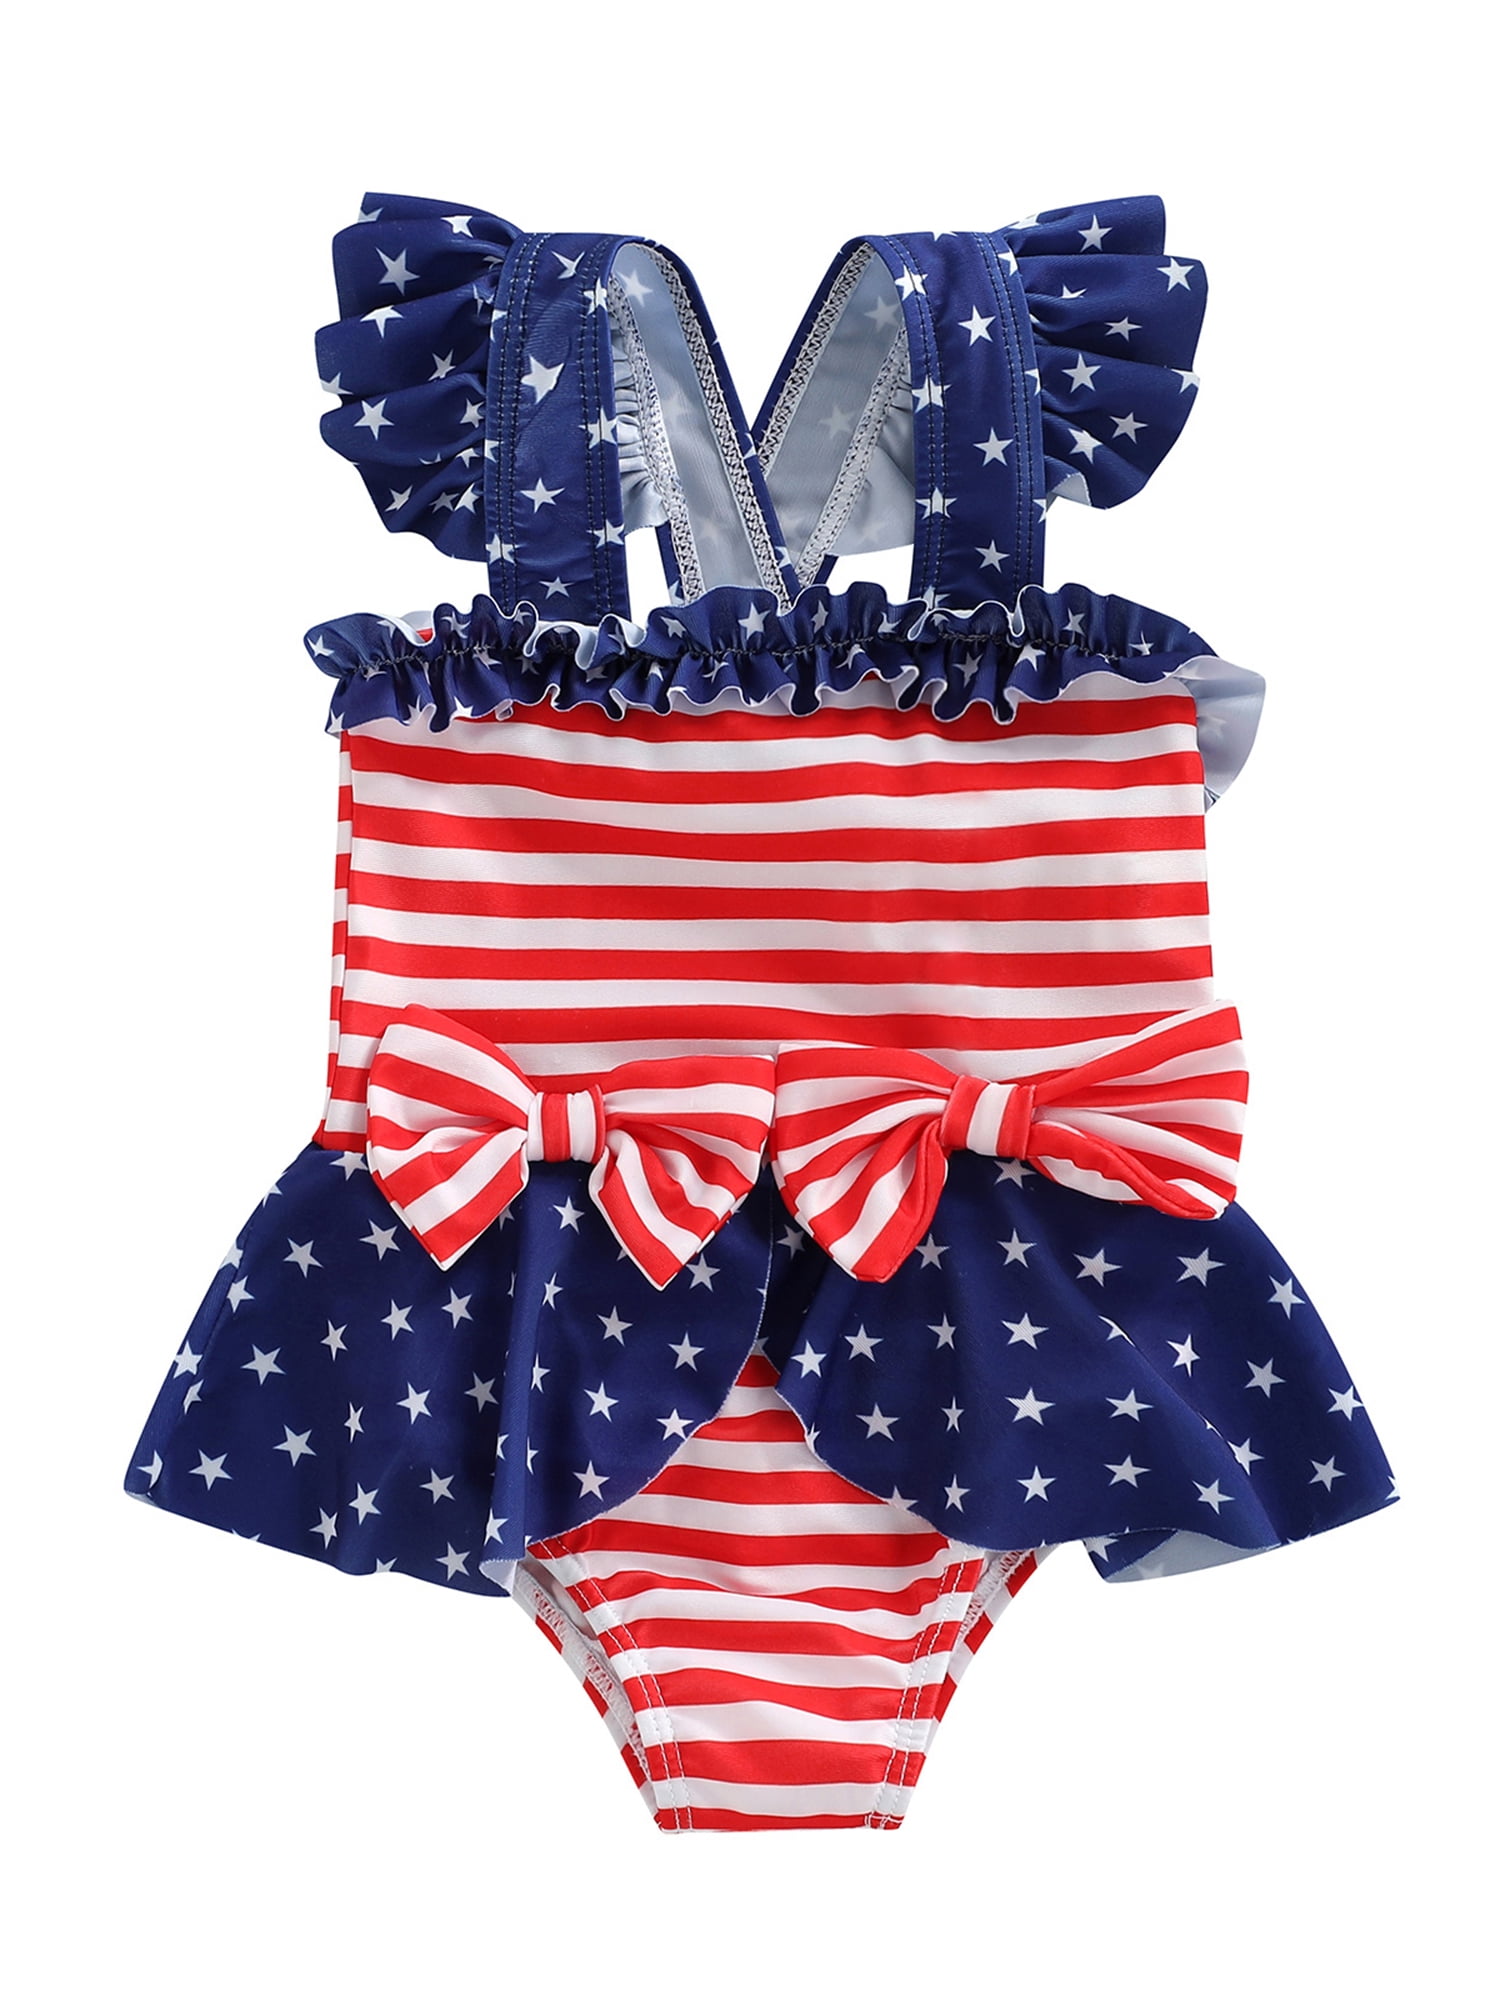 4th of July Infant Baby Girl Swimsuit Ruffle Stars Strap Top and Bikinis Skirt with Headband 3 Piece Swimwear 